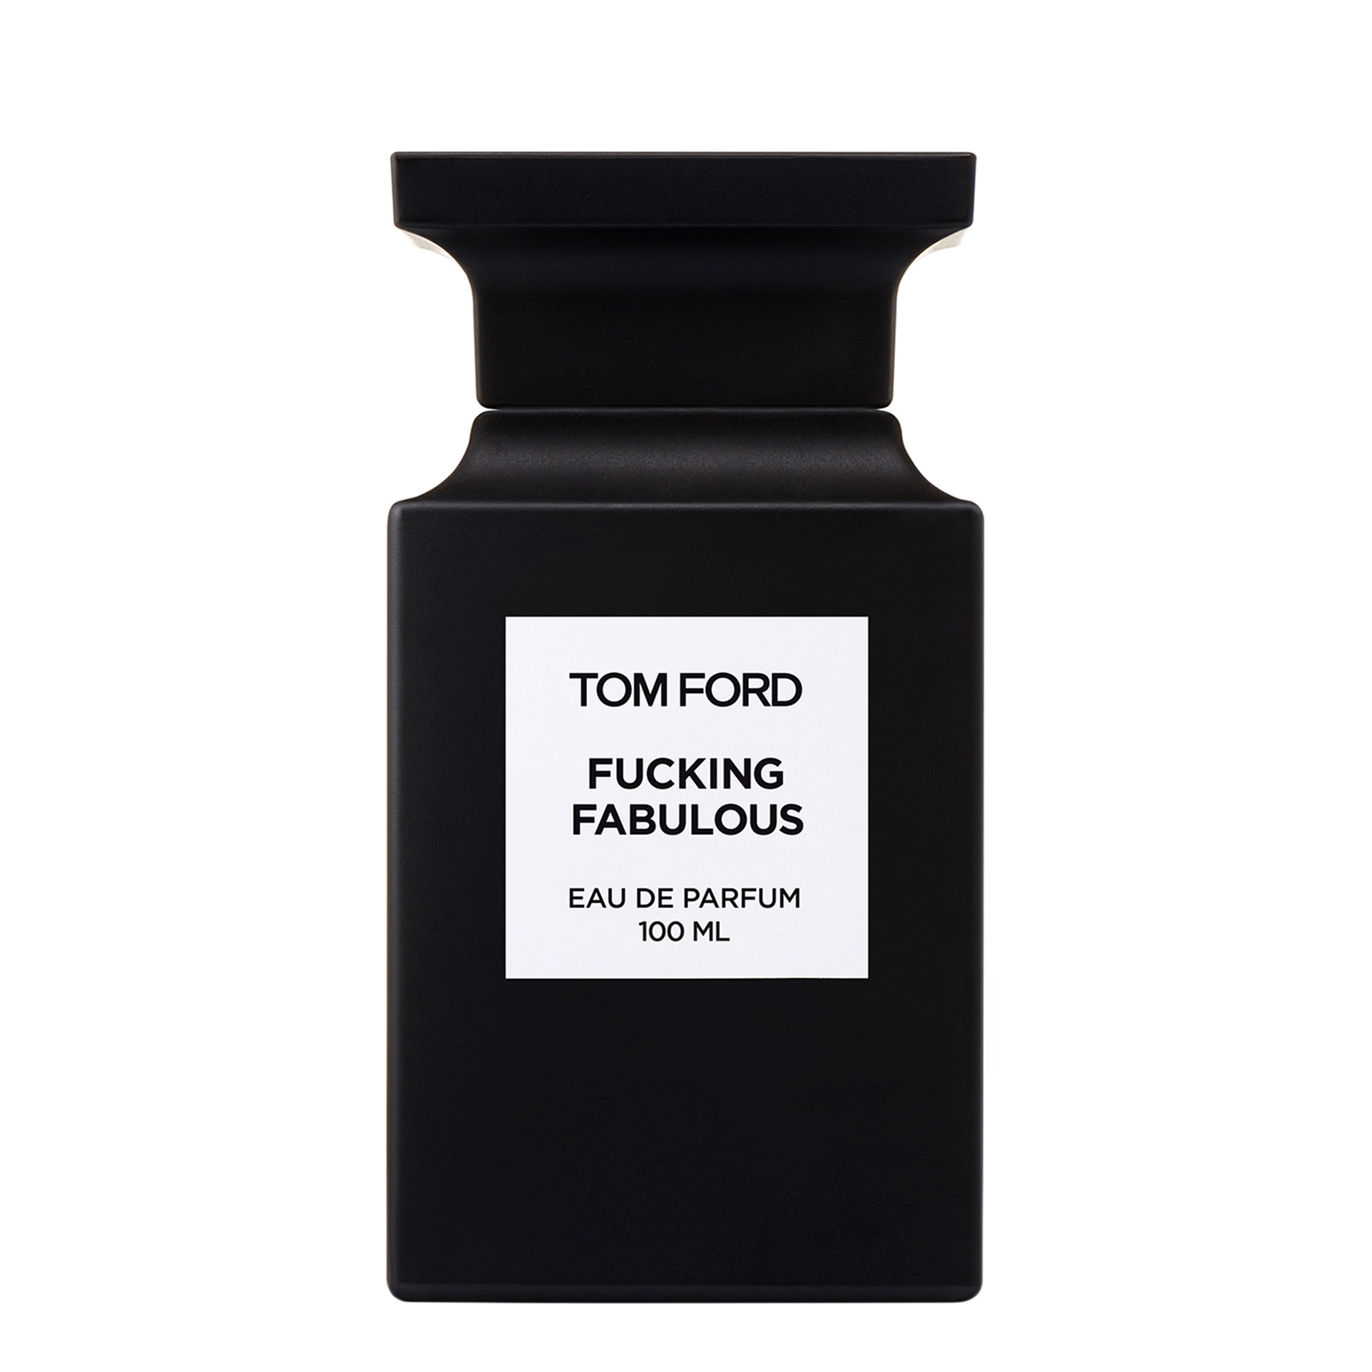 Tom Ford F****** Fabulous Eau De Parfum 100ml, Fragrance, Spray